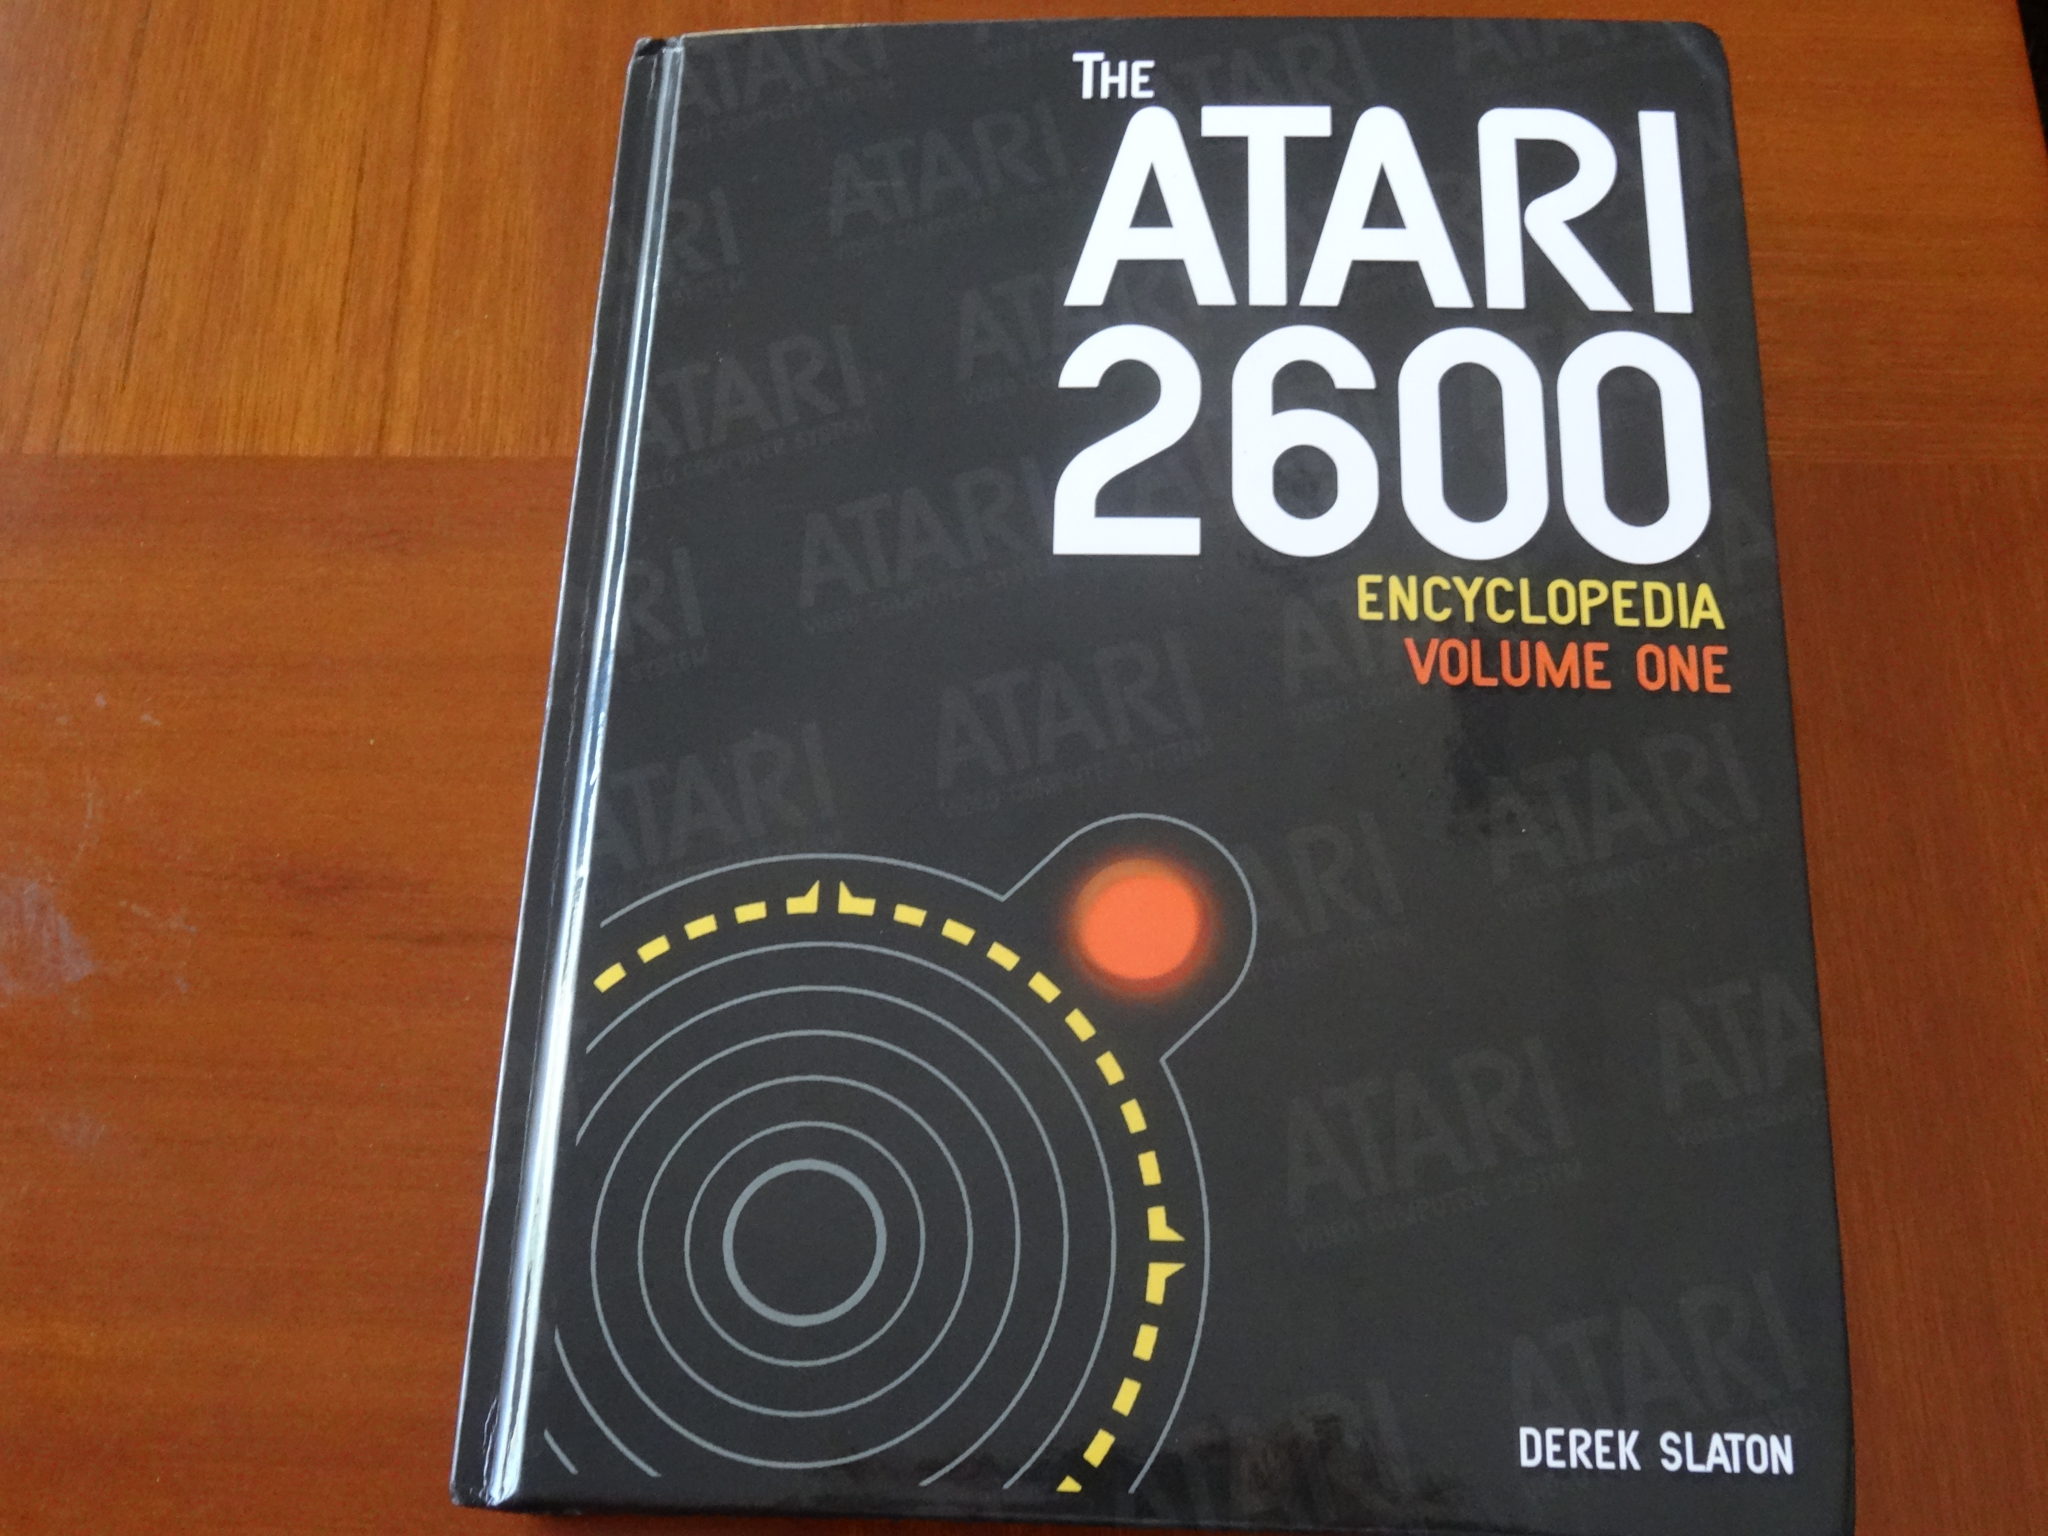 Atari 2600 Encyclopedia Volume 1